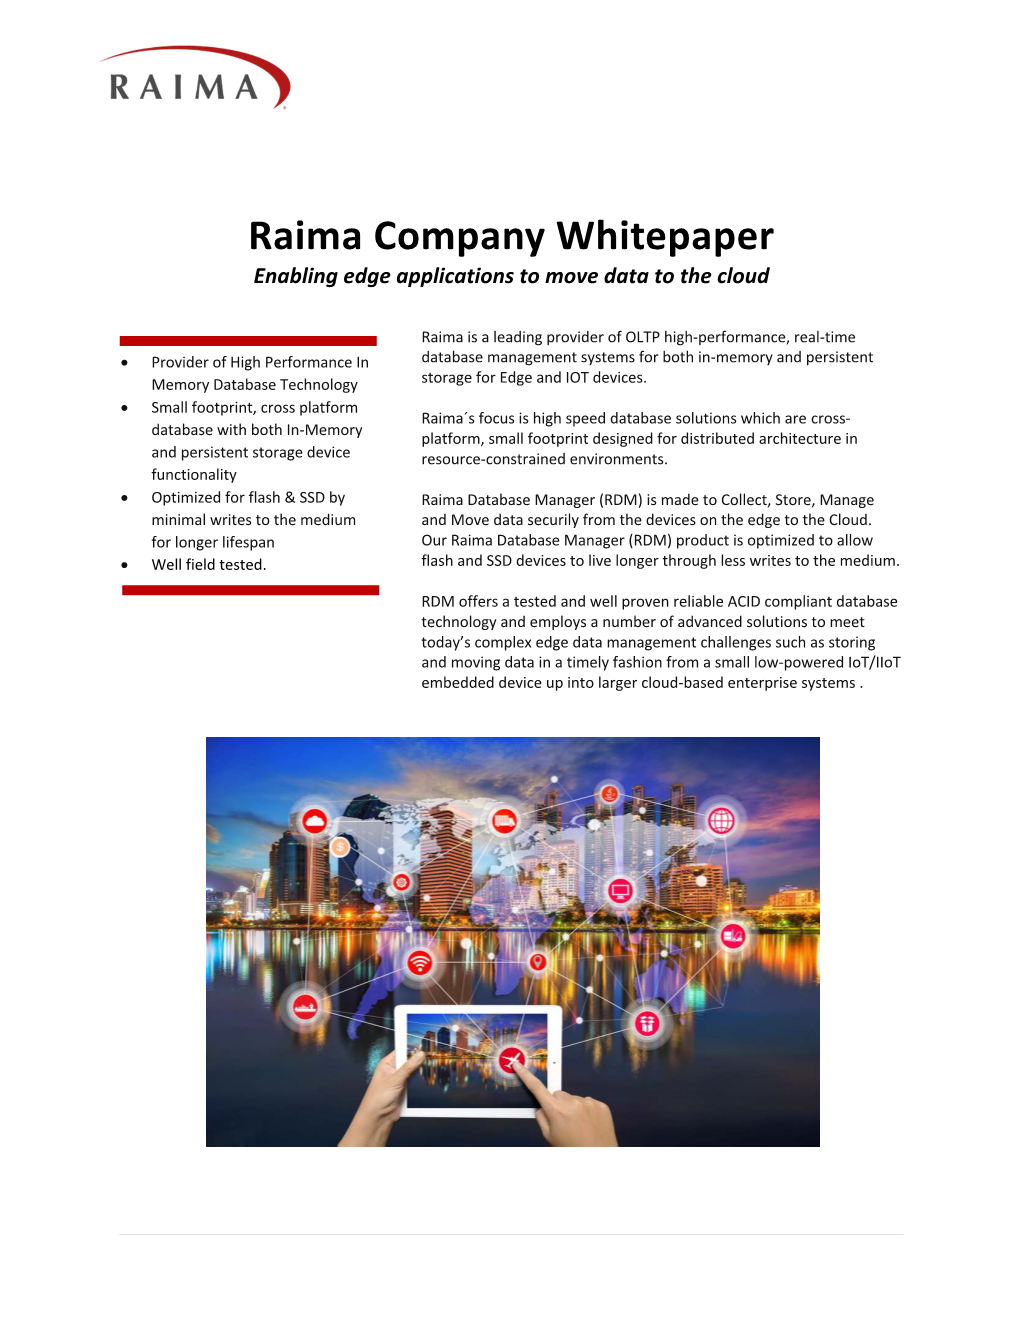 Raima Company Whitepaper Enabling Edge Applications to Move Data to the Cloud